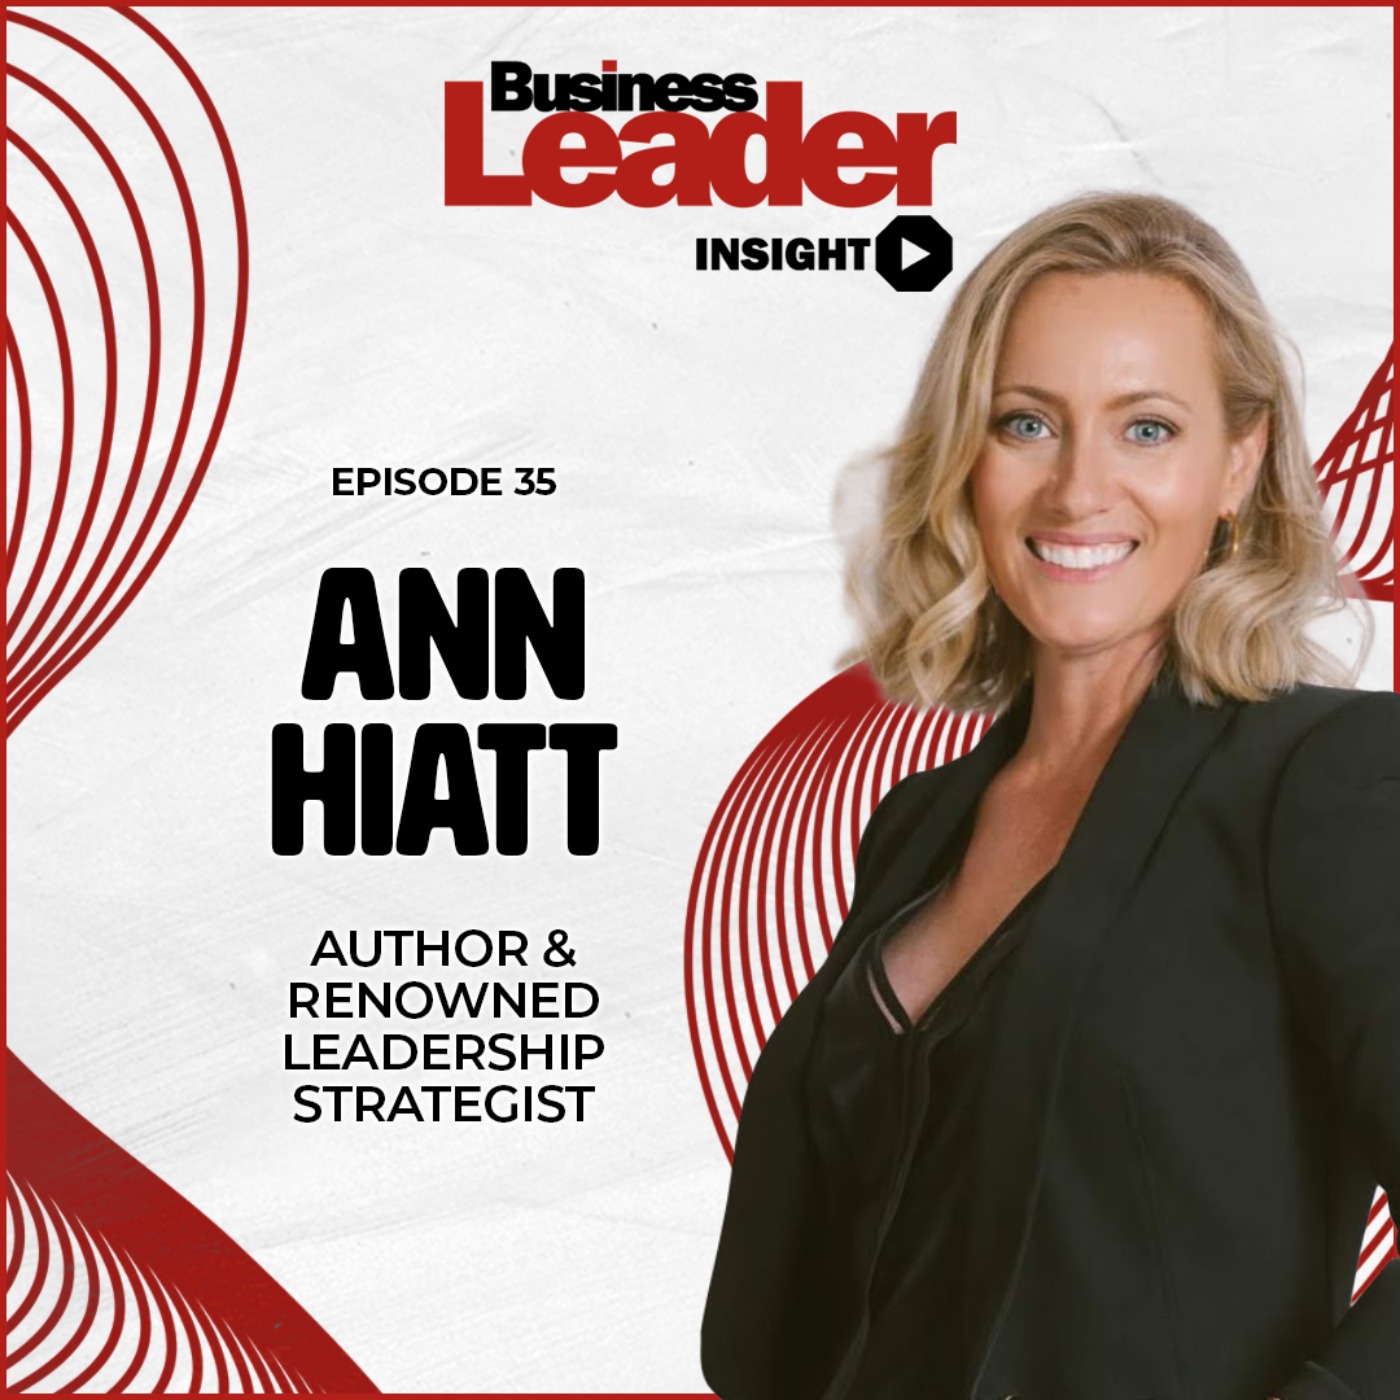 Ann Hiatt: author & renowned leadership strategist